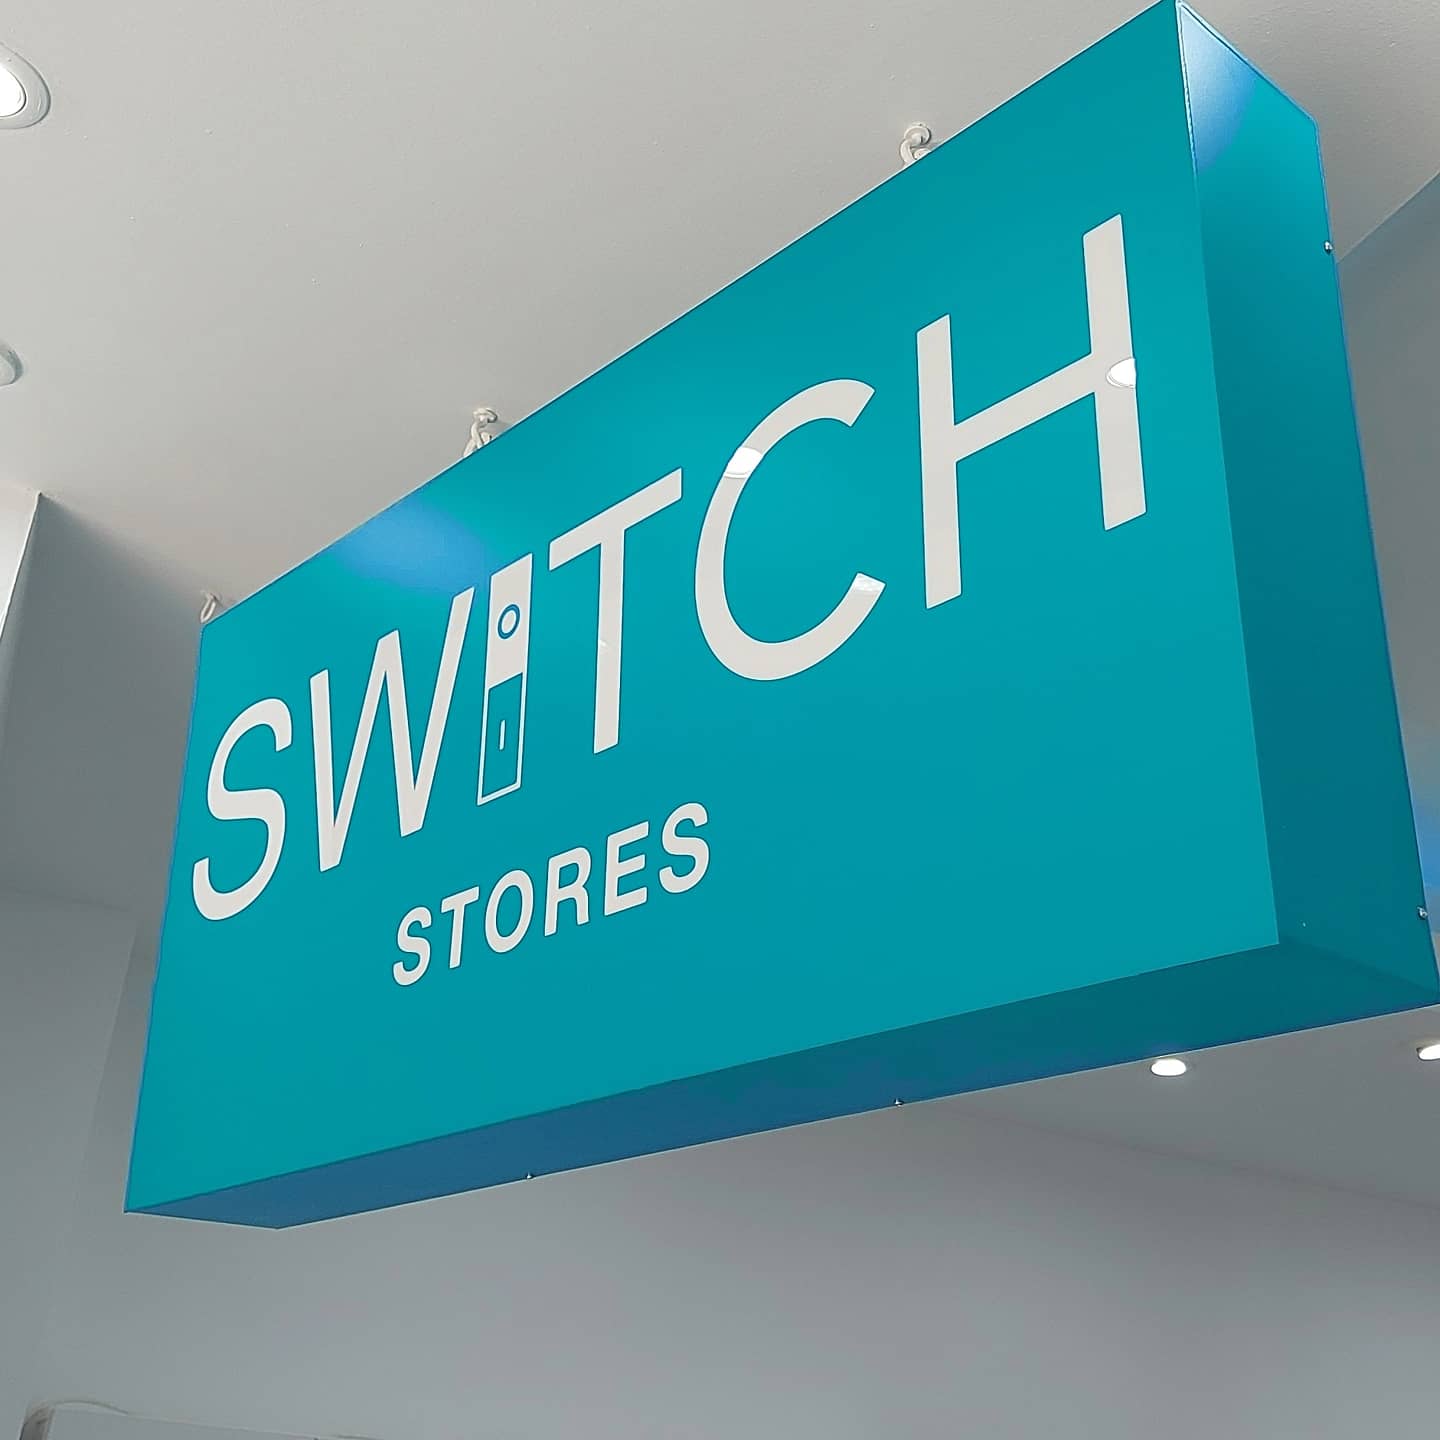 To νέο Switch Stores στον Χολαργό είναι γεγονός!